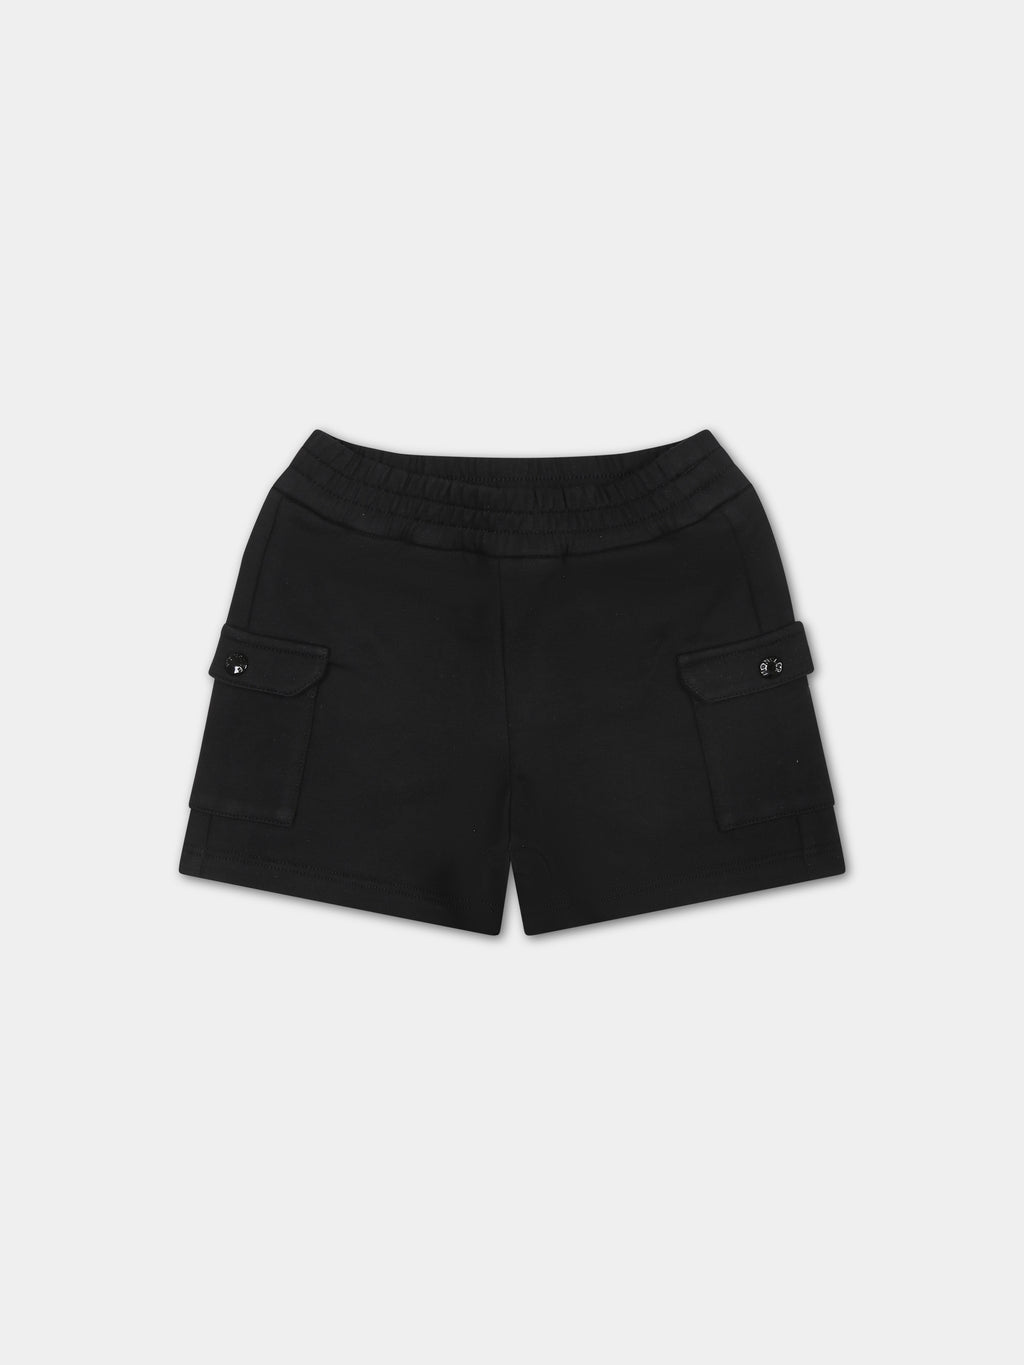 Black sports shorts for baby boy